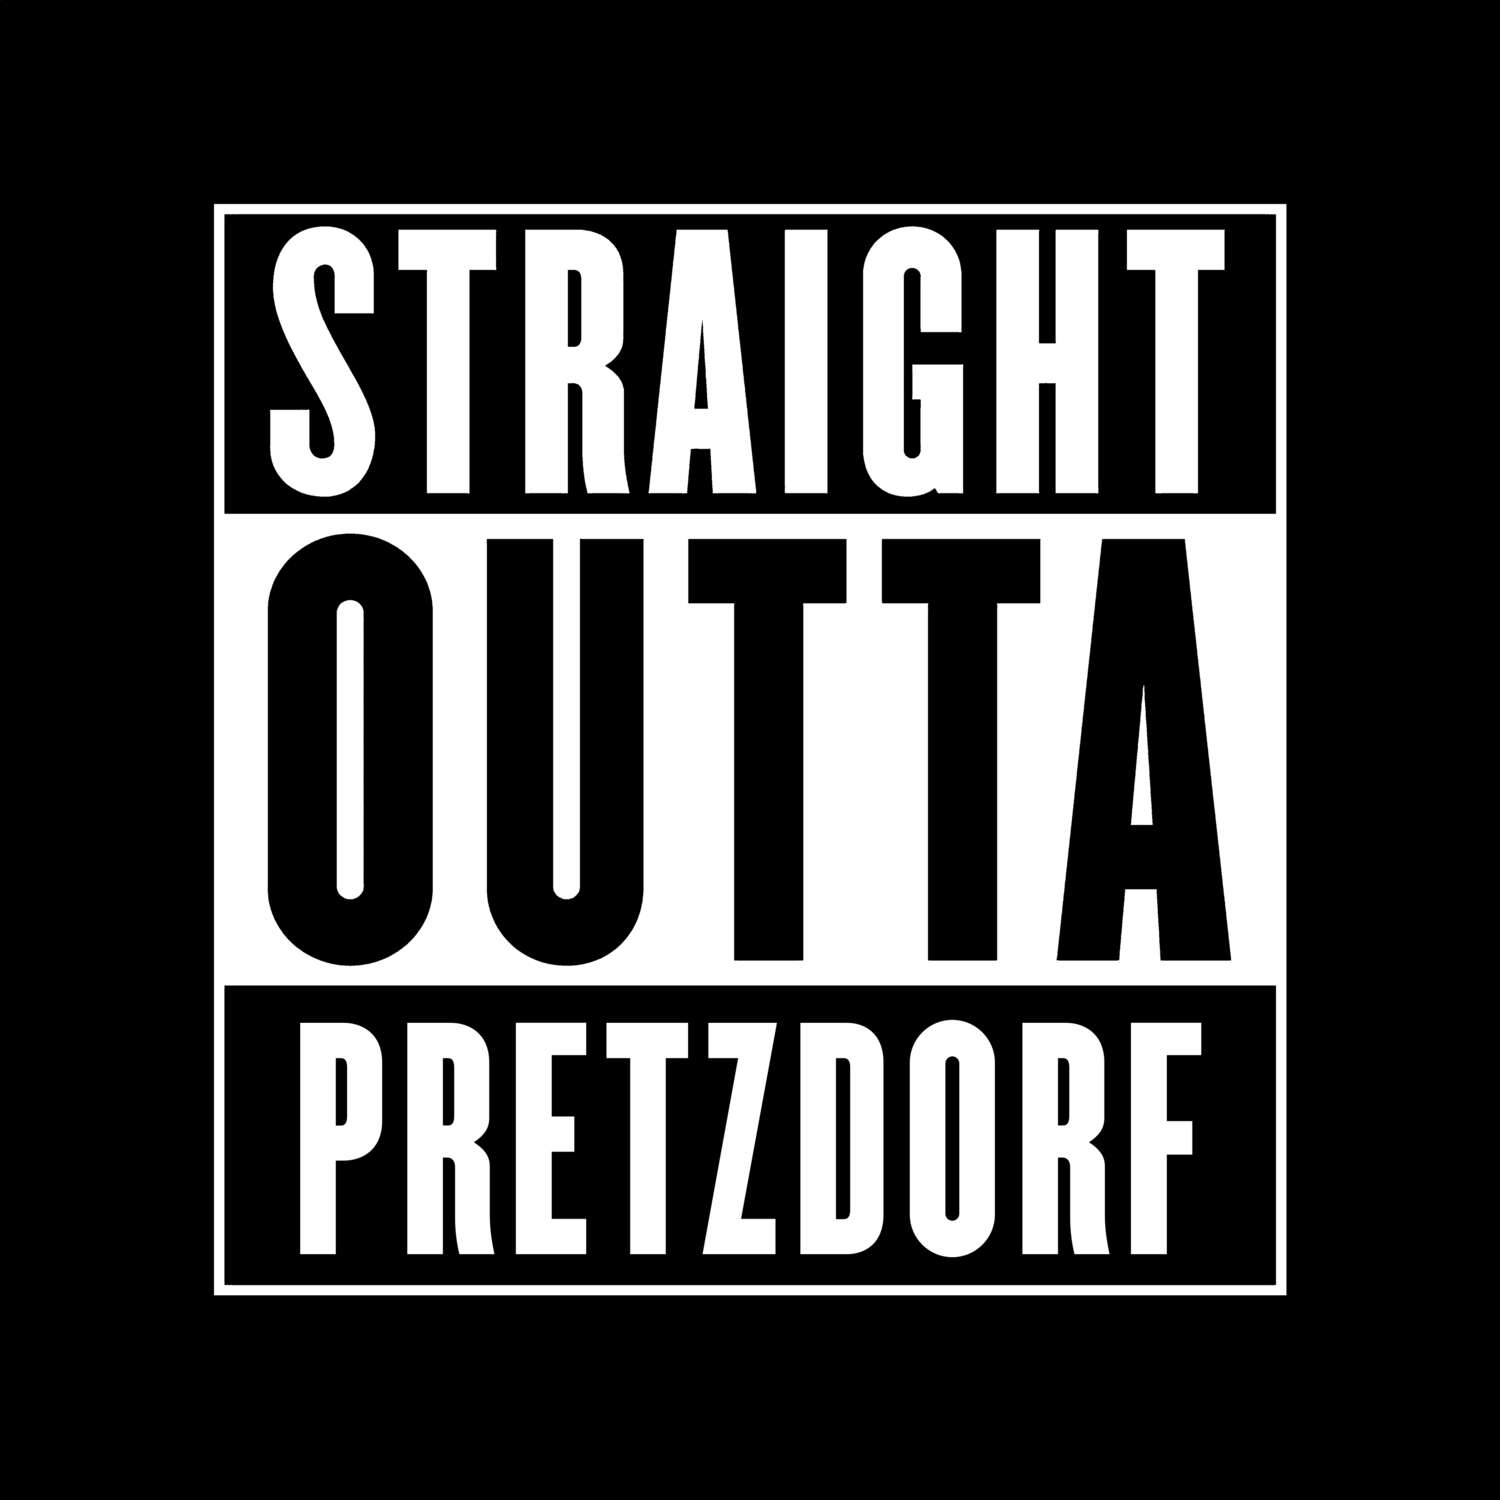 Pretzdorf T-Shirt »Straight Outta«